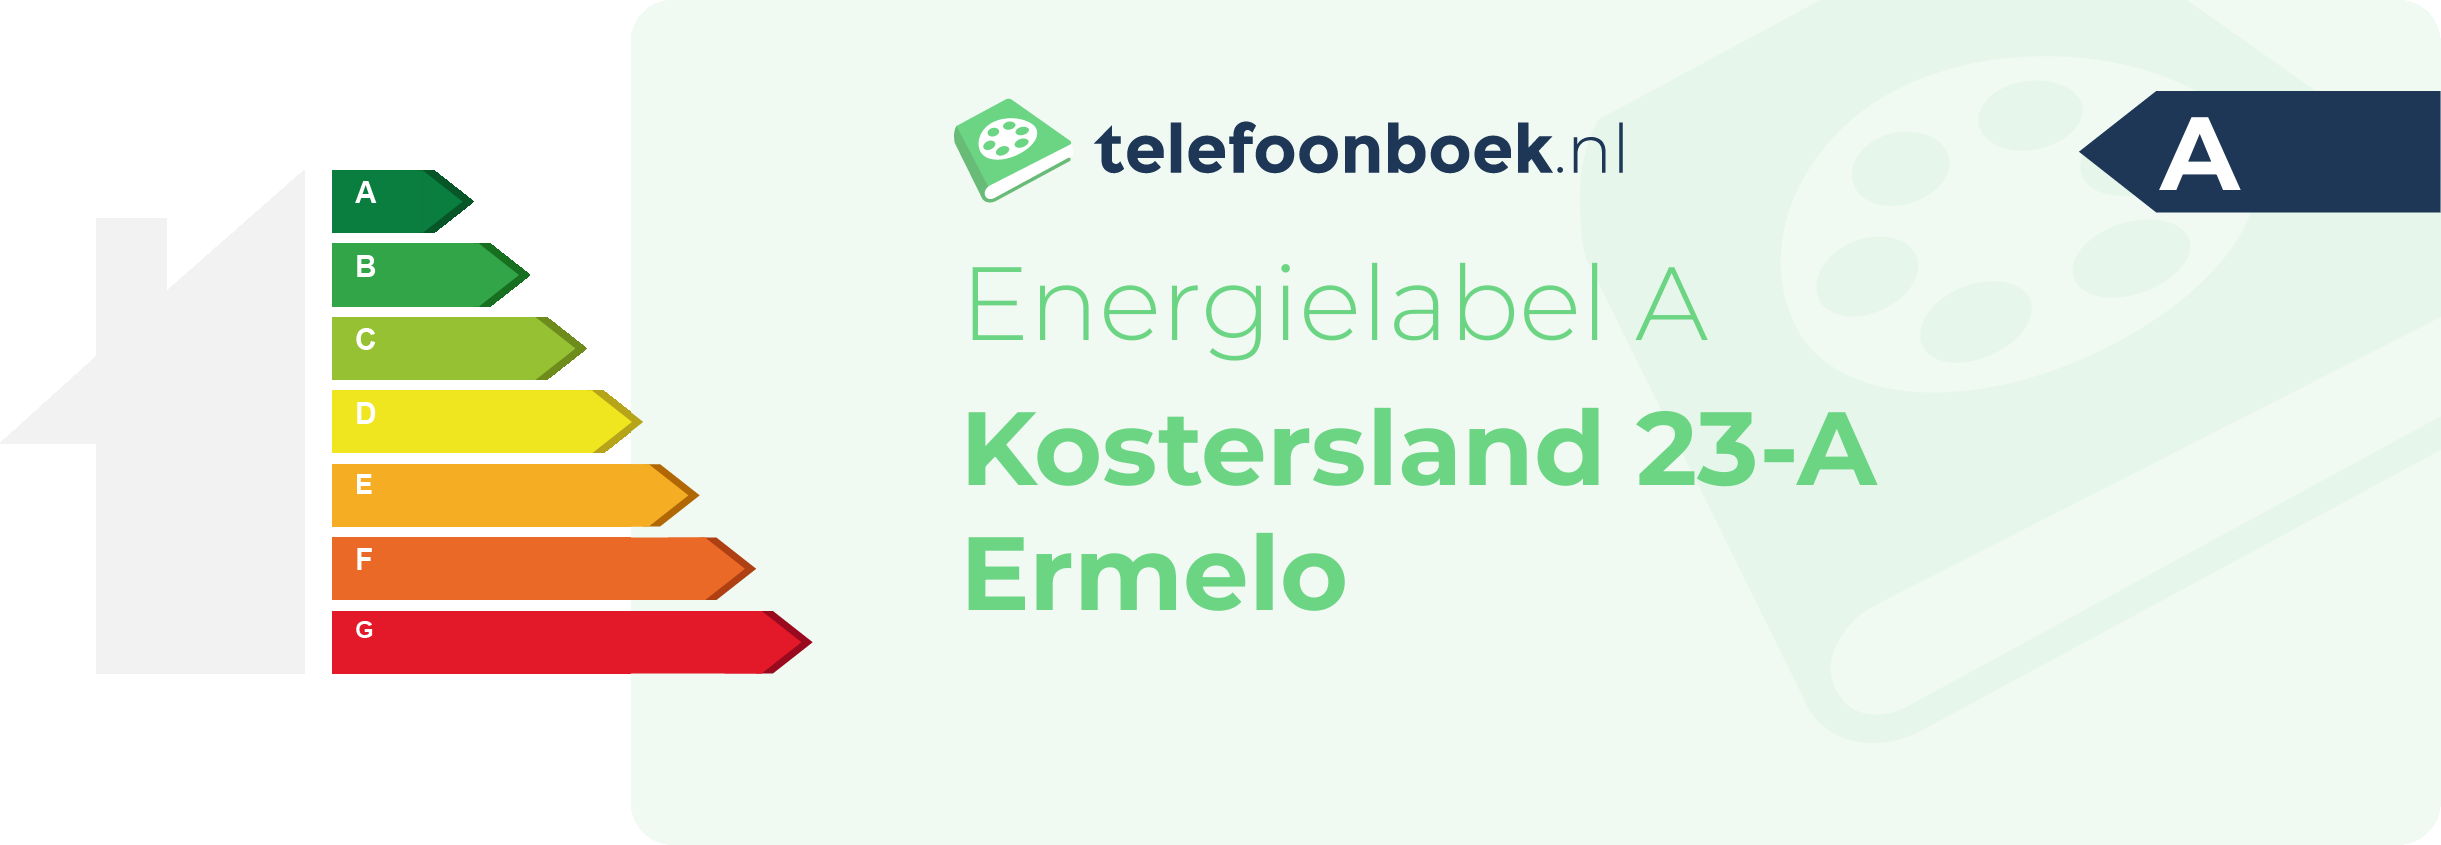 Energielabel Kostersland 23-A Ermelo